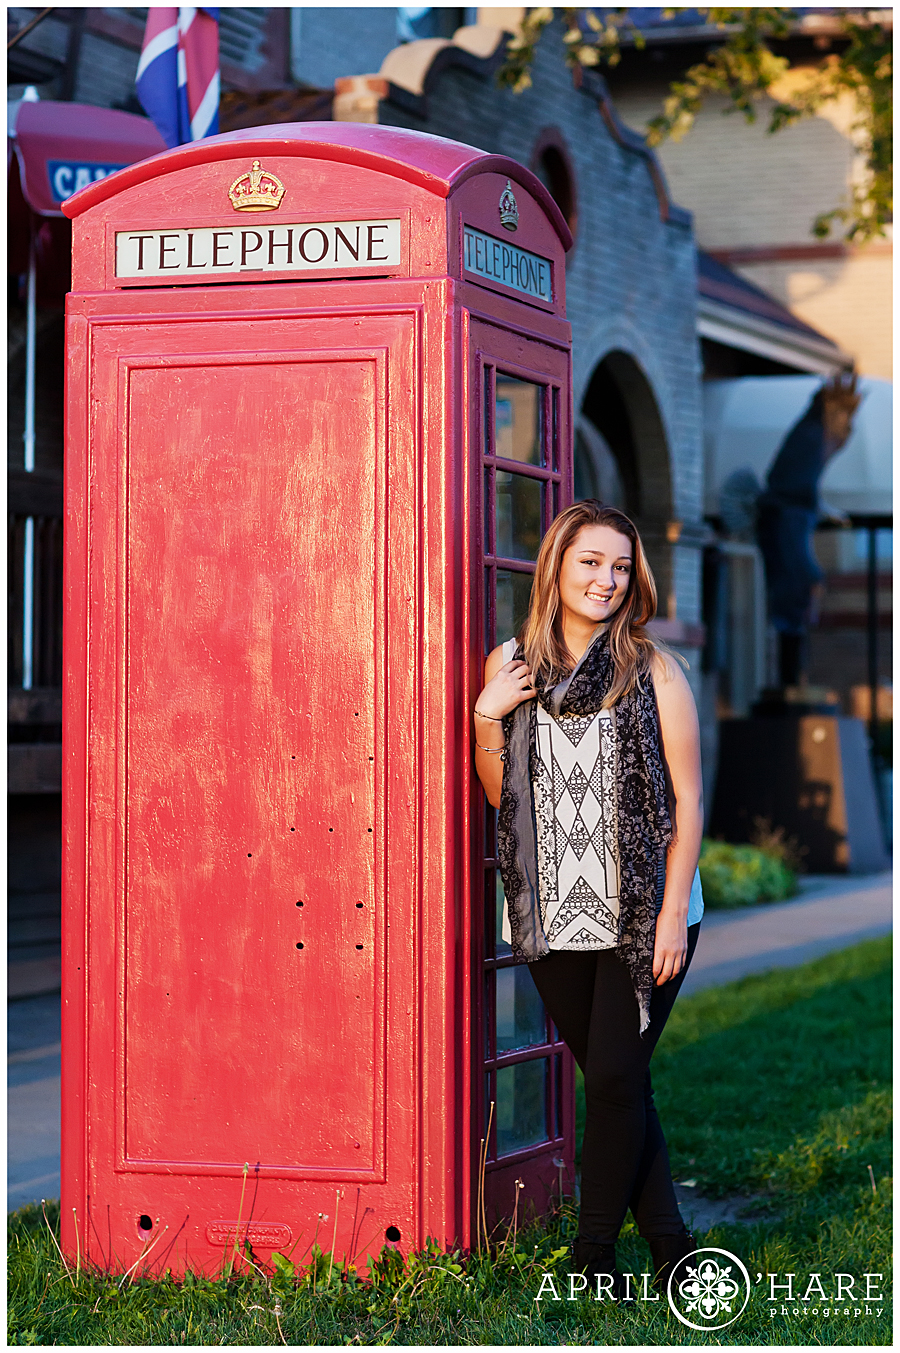 Pints Pub British Telephone Booth perfect for senior photos in Denver